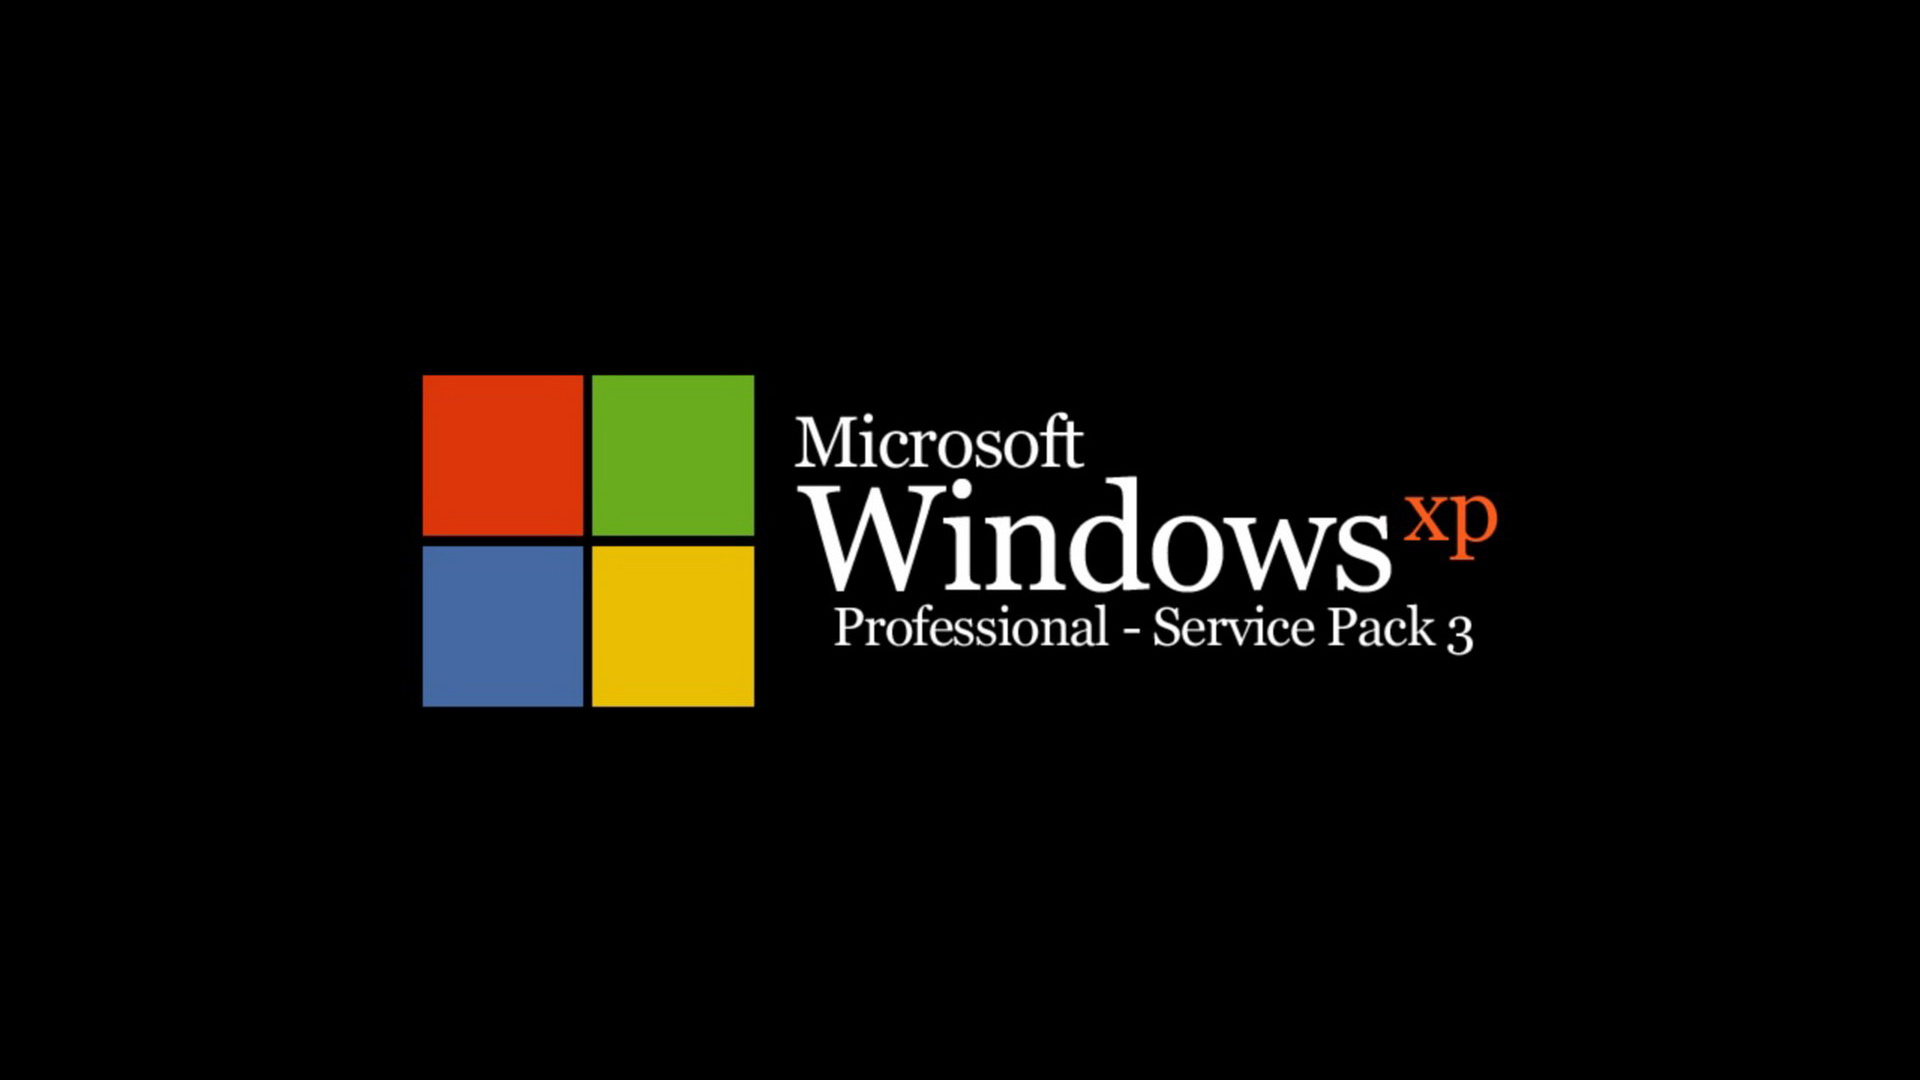 Windows Xp, Microsoft Windows, Logo, Text, Graphic Design. Wallpaper in 1920x1080 Resolution